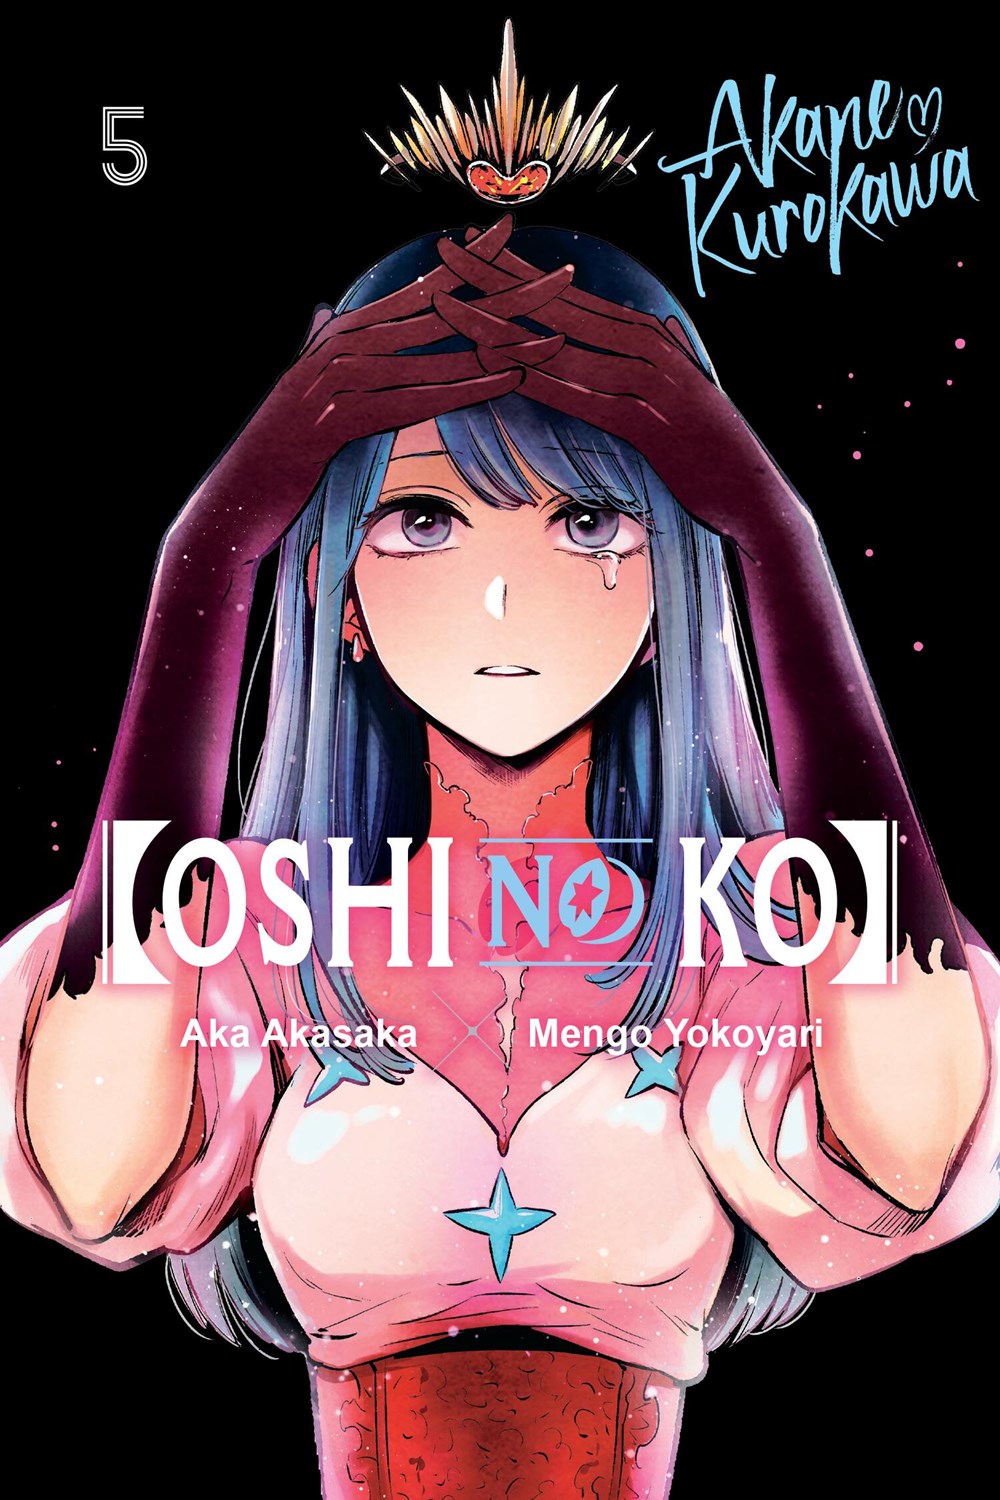 Oshi no ko Series Crunchyroll Store